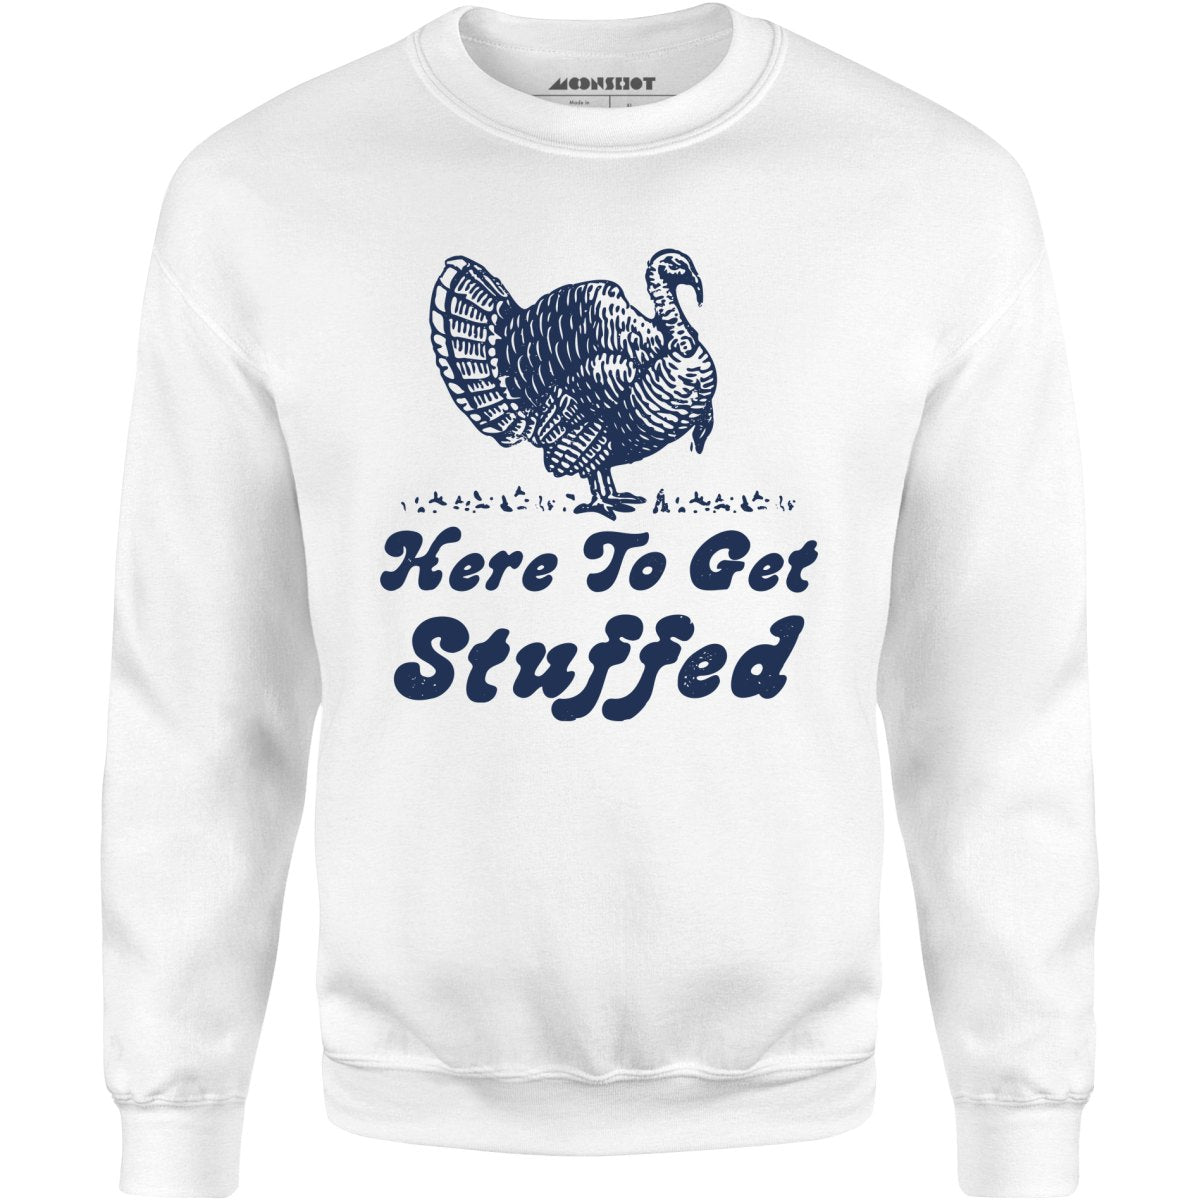 Here to Get Stuffed - Unisex Sweatshirt